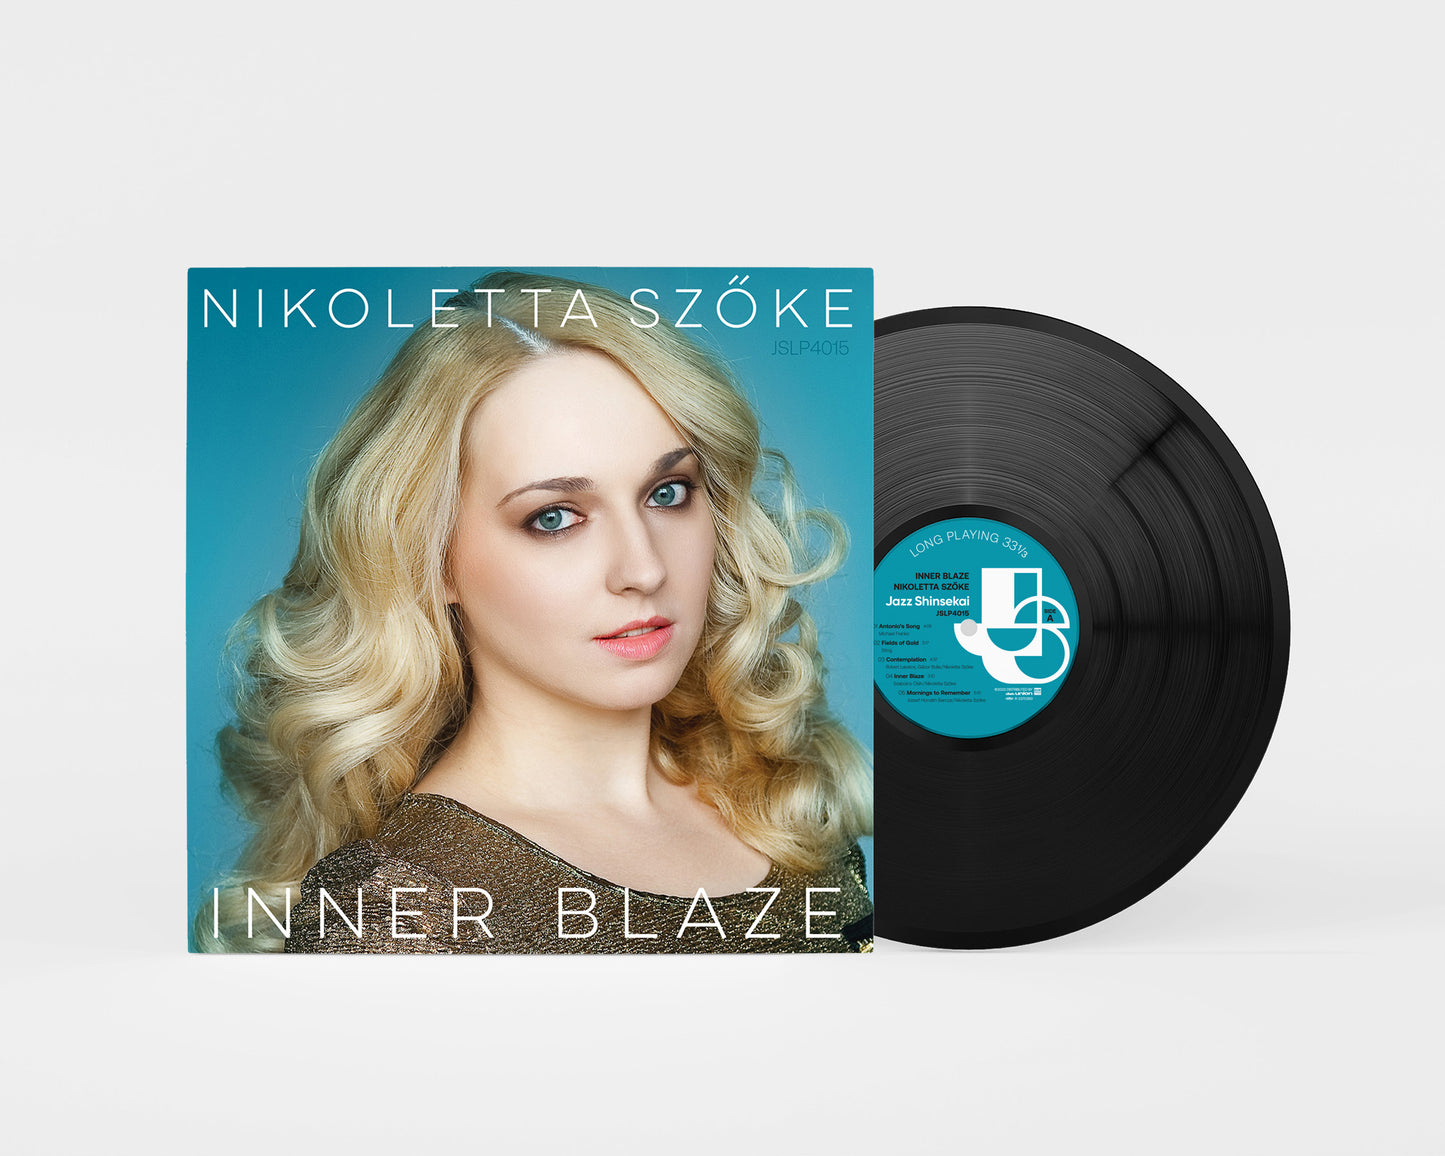 INNER BLAZE (LP) - NIKOLETTA SZOKE